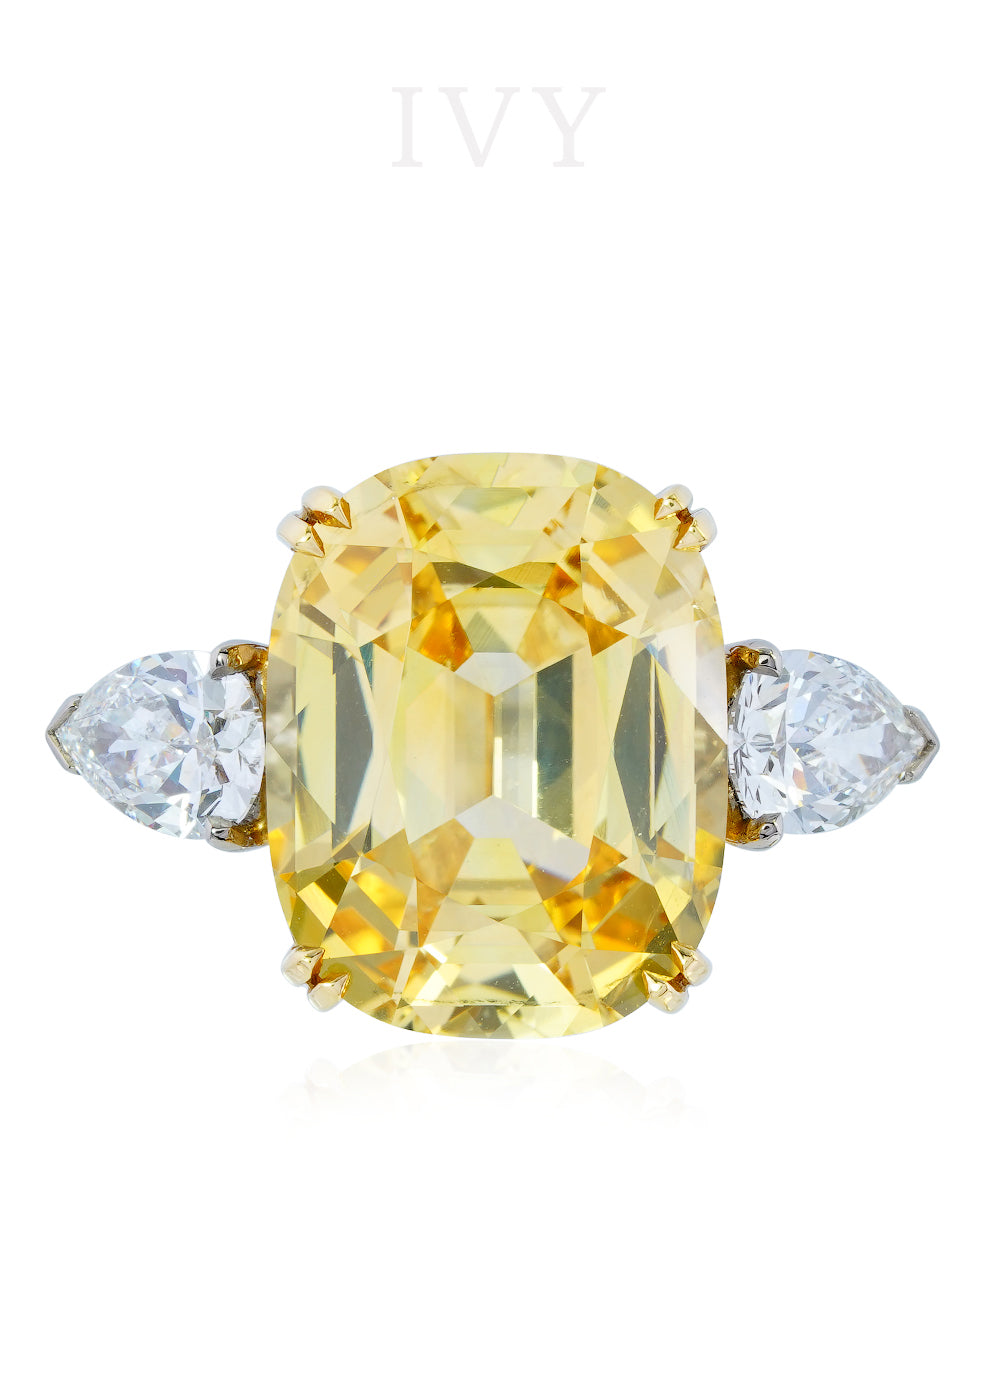 Fancy yellow pear shaped diamond ring